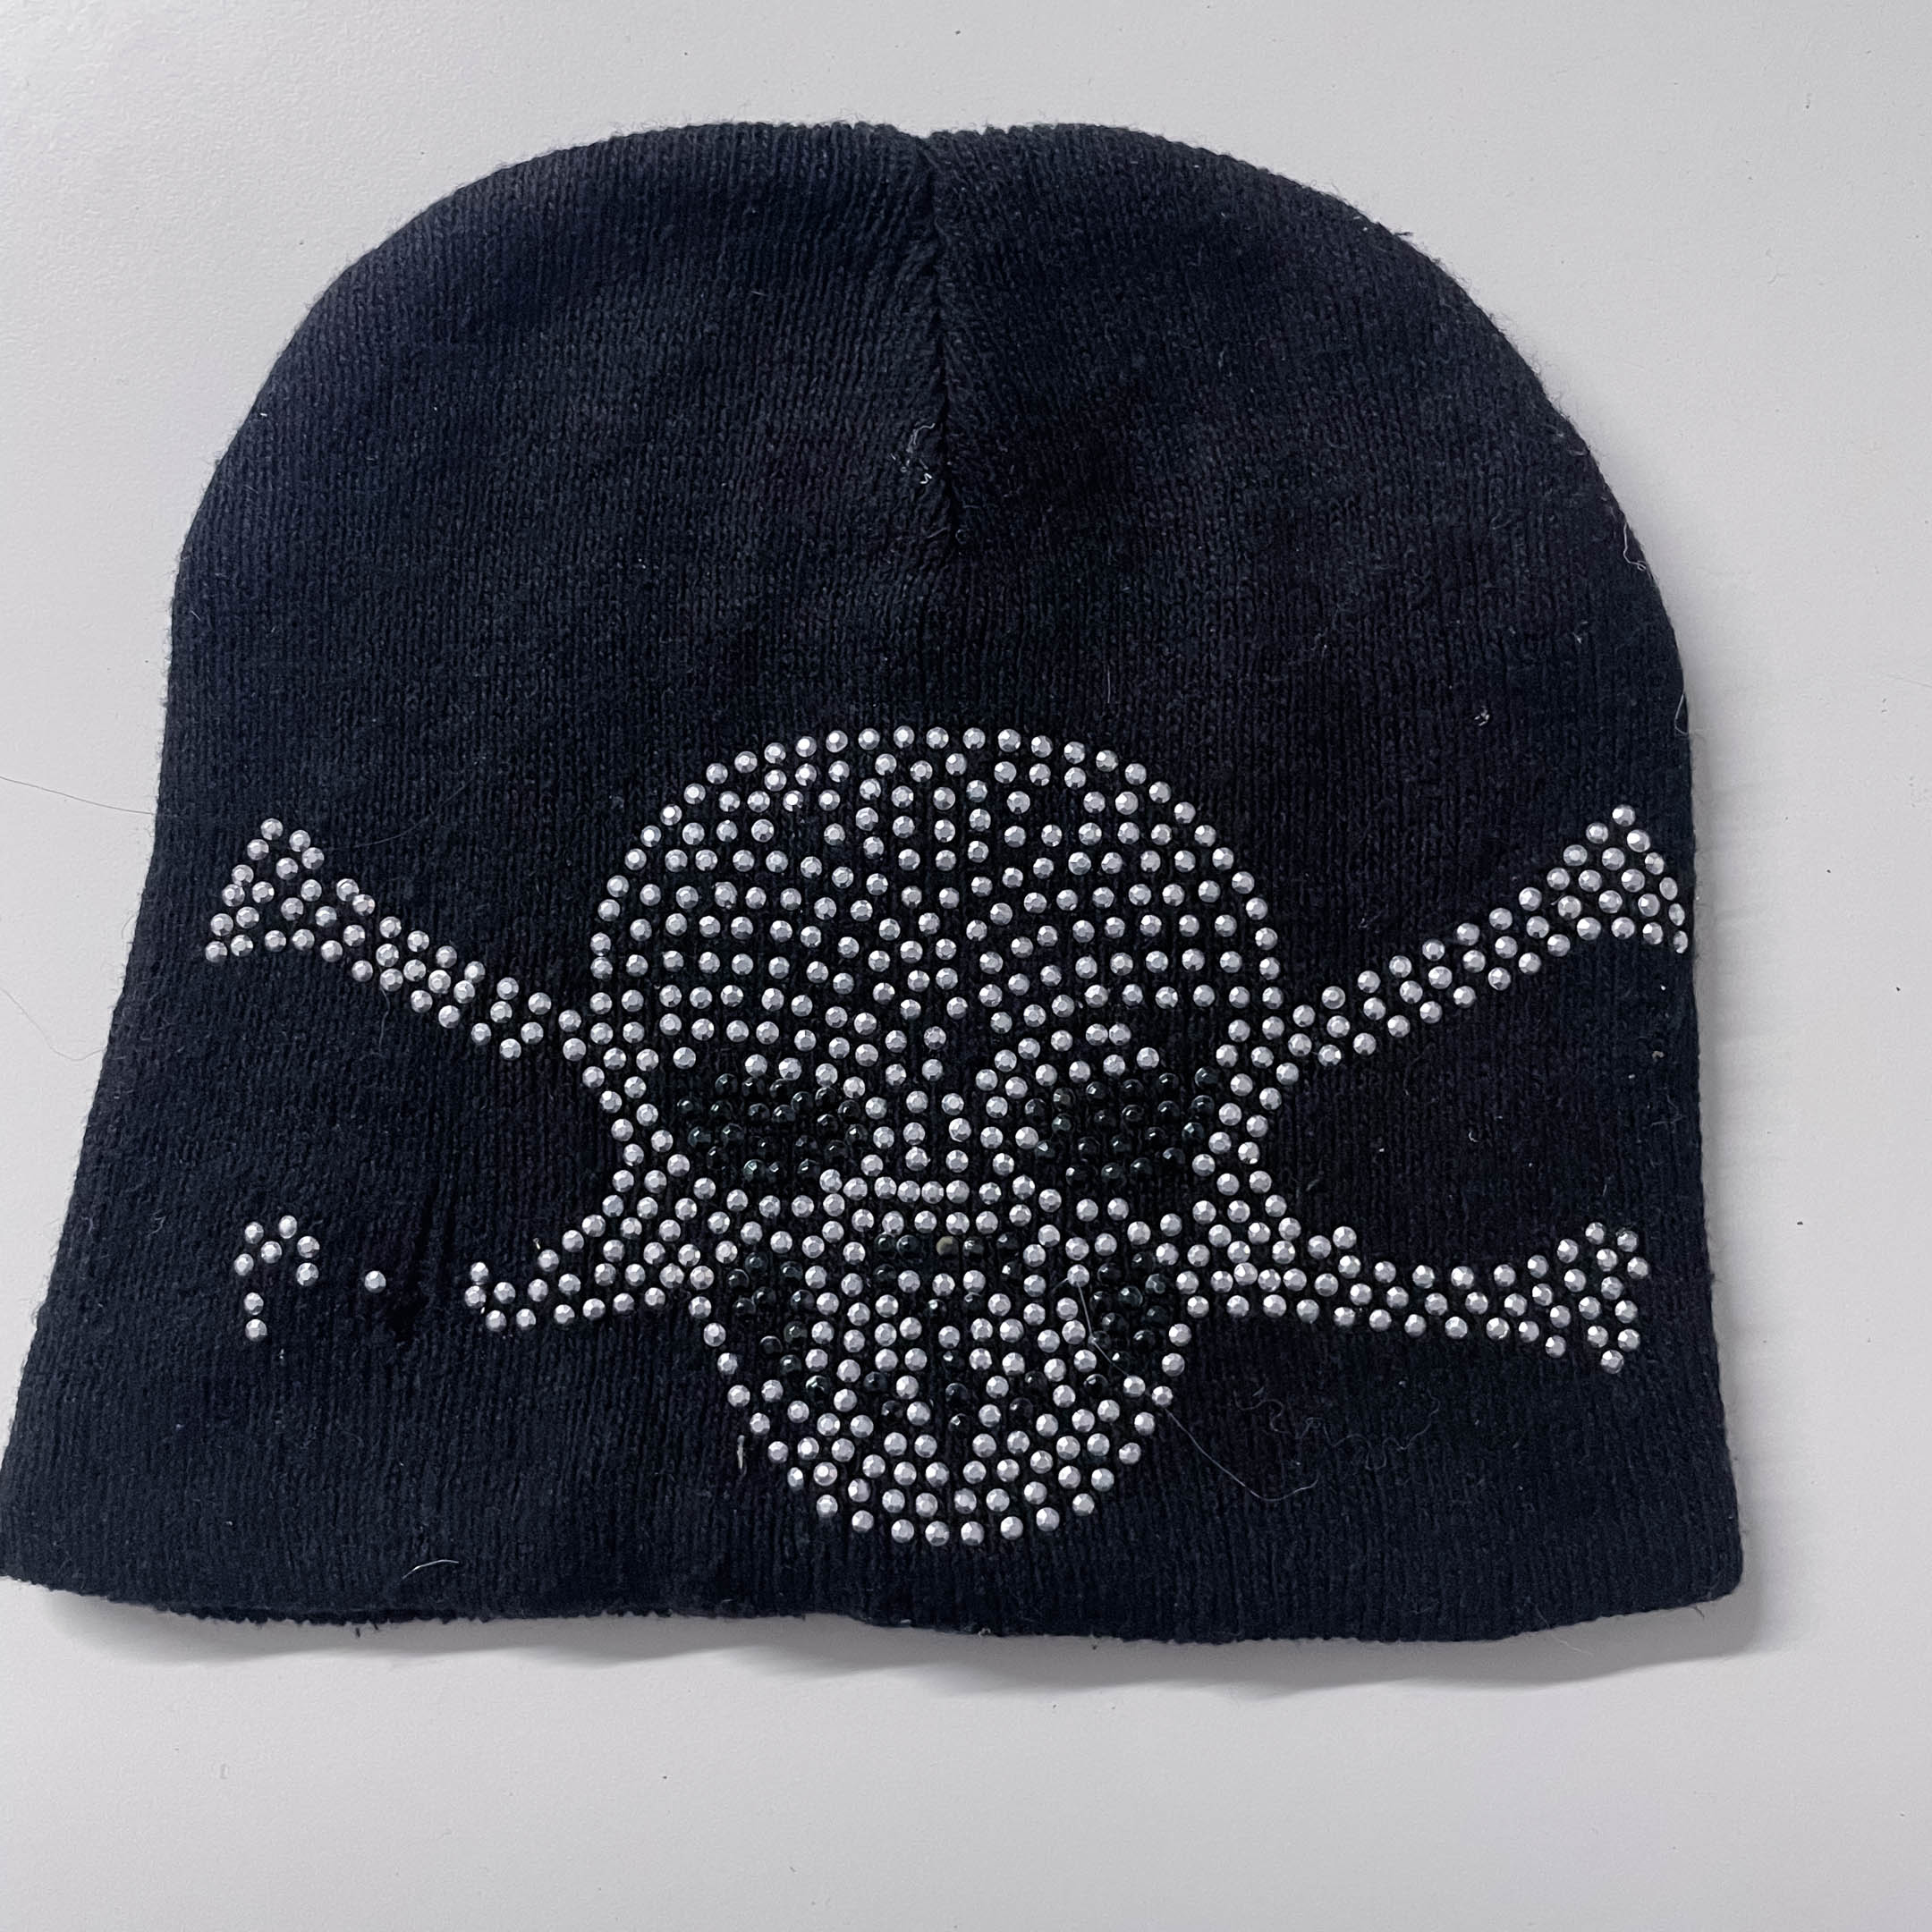 Vintage Black studded skull embroidery beanie winter hat